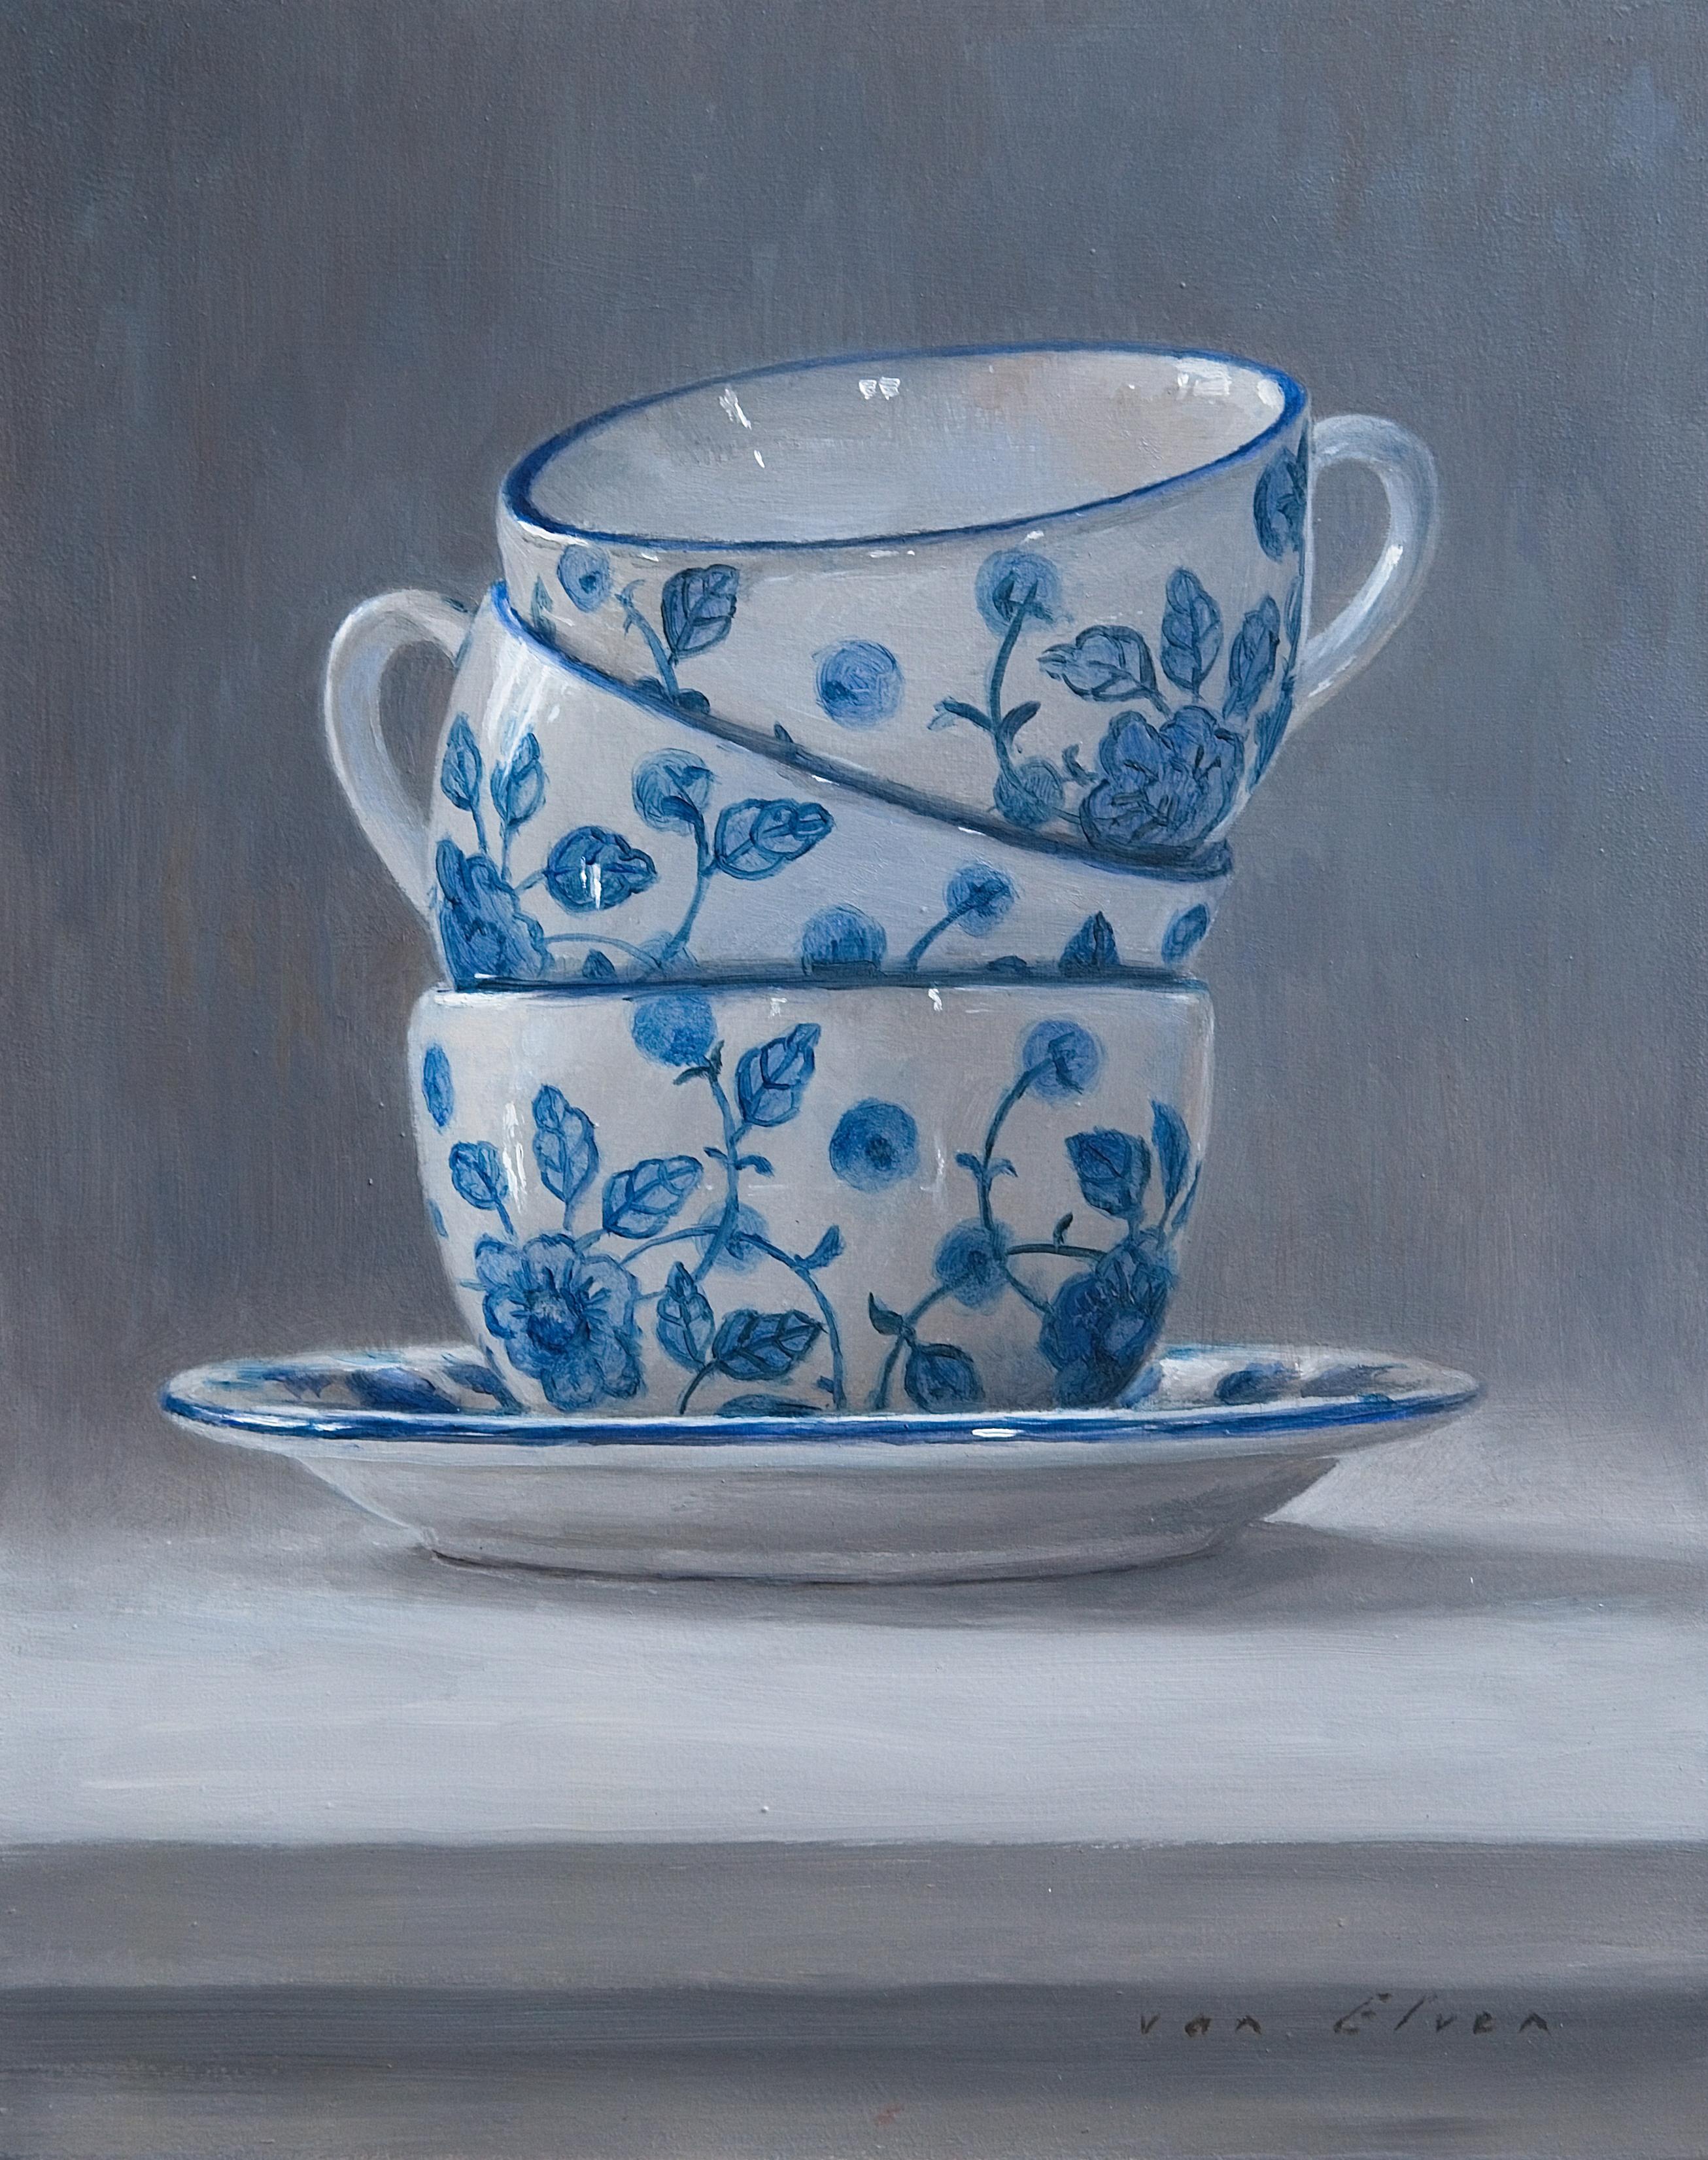 Erik van Elven Still-Life Painting - Three Times Tea - 21st Century Contemporary Still-life Painting of Tea Cups